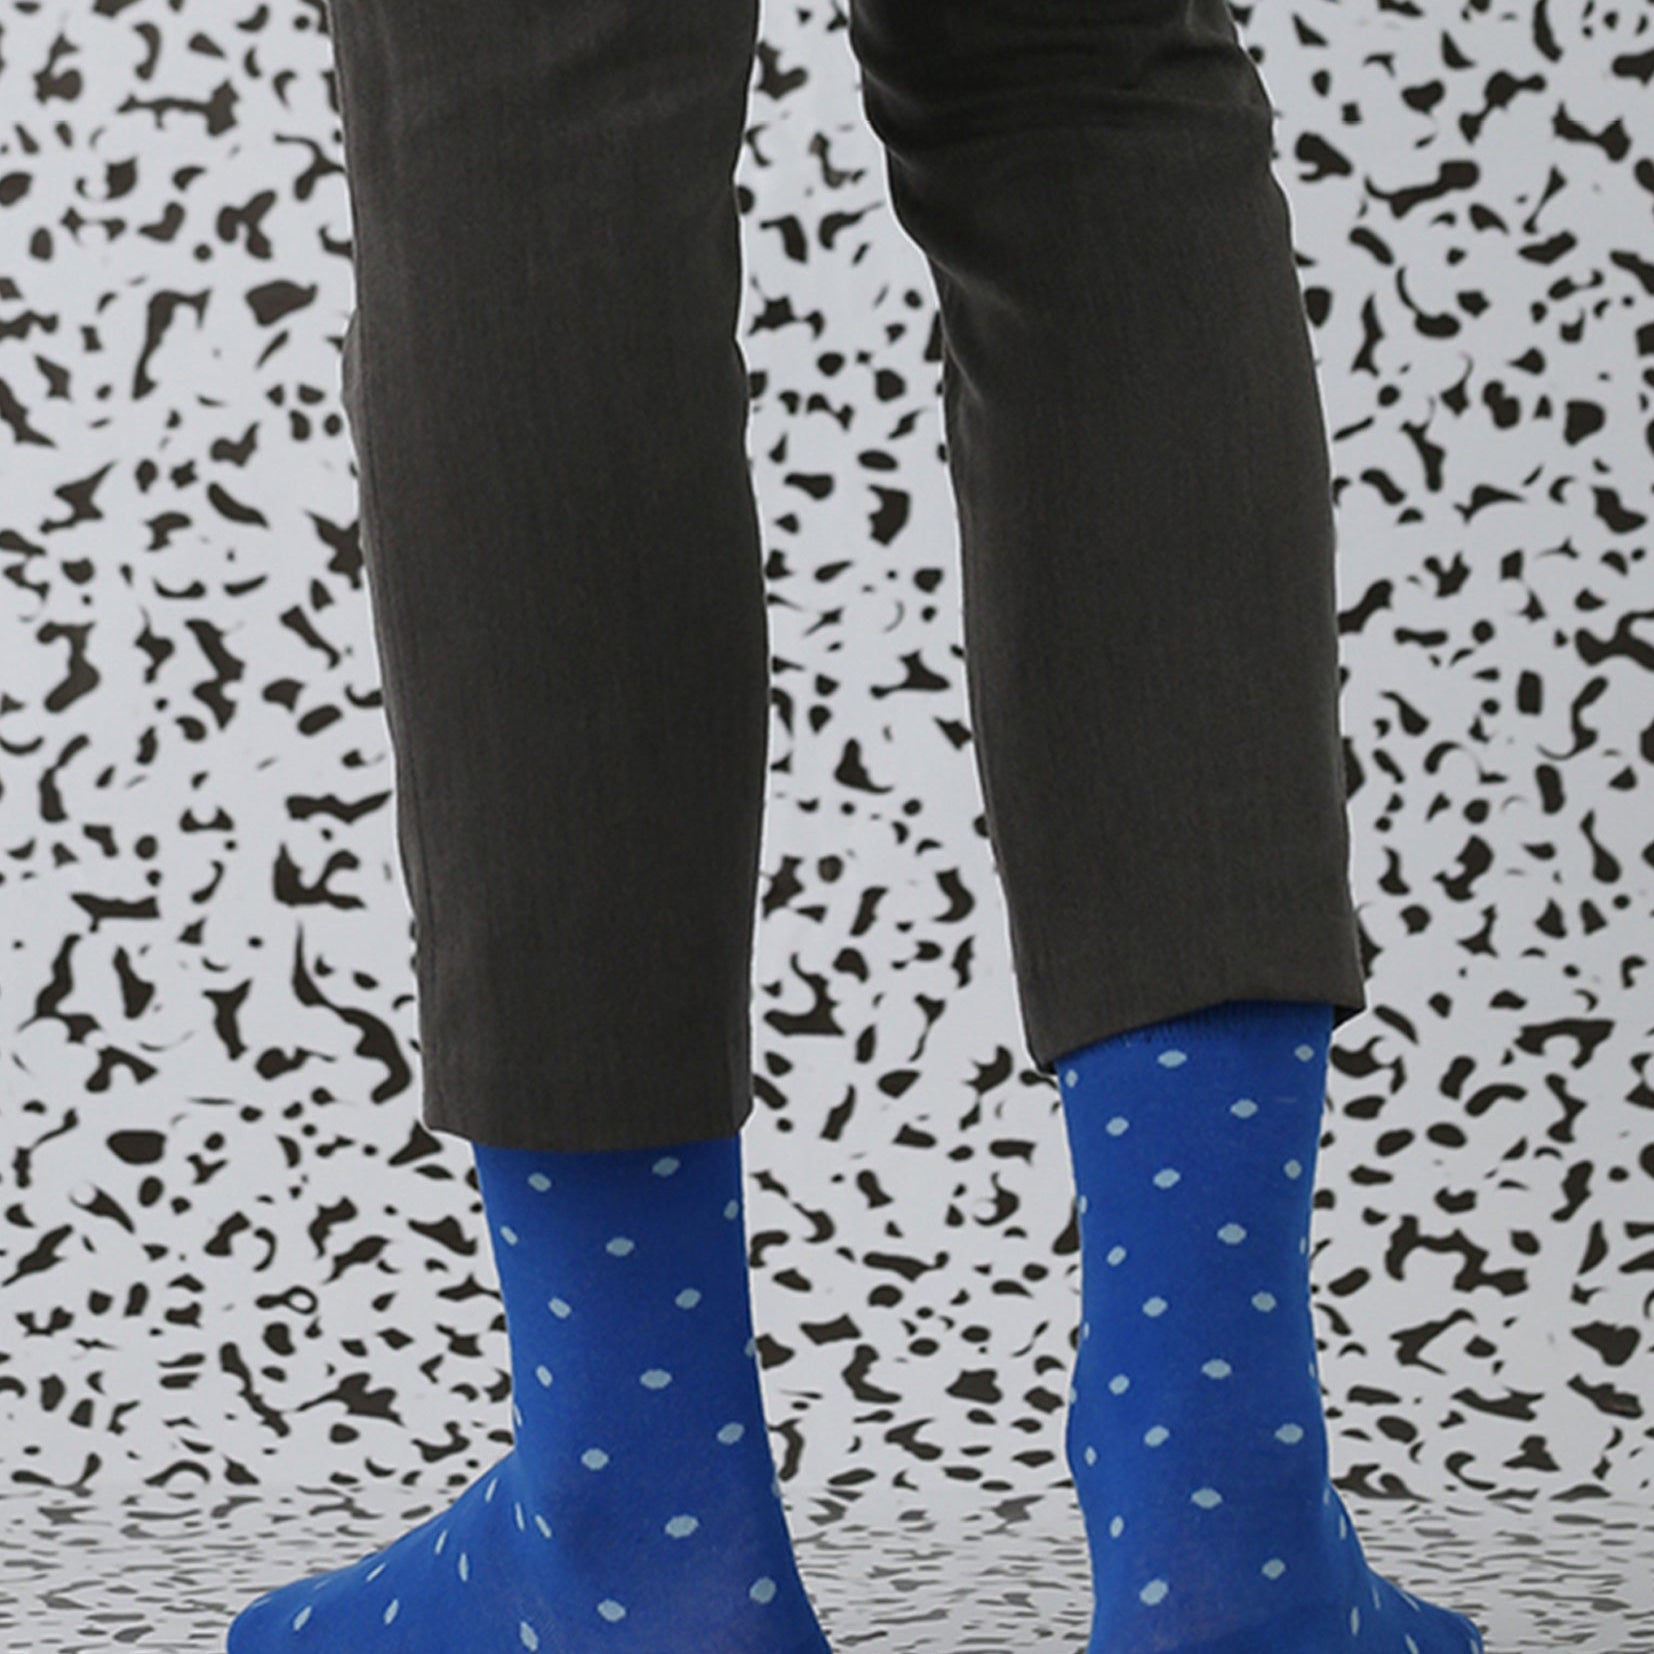 Tiny polka dot mid-calf socks - blue